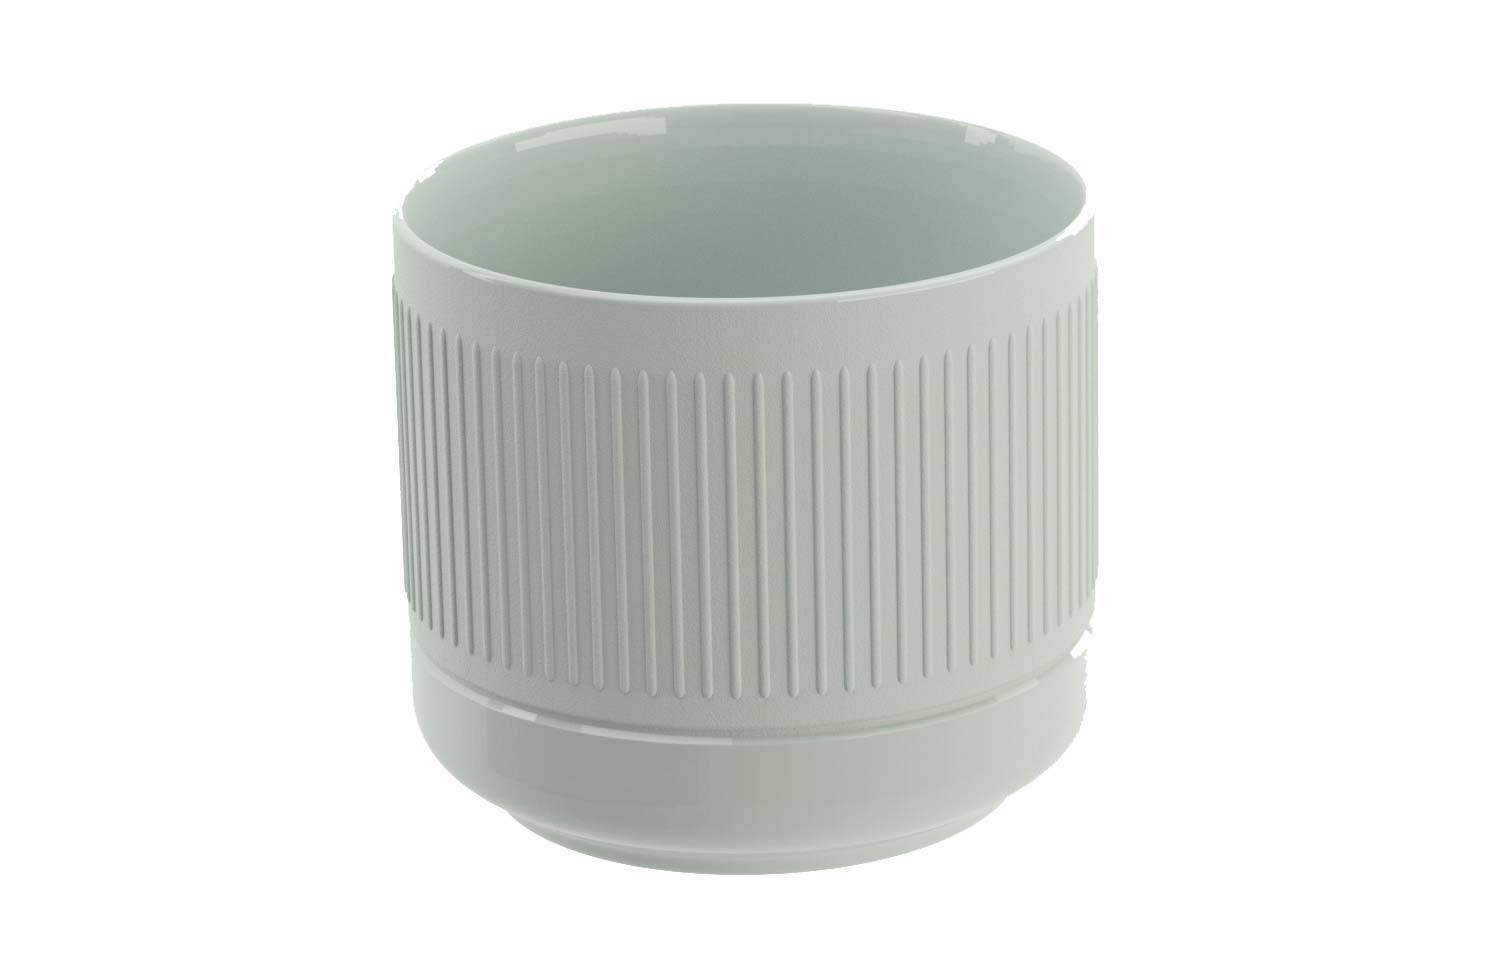 Vaso Equilibrium porcelana celadón Rosenthal textura rayas Pomd'or